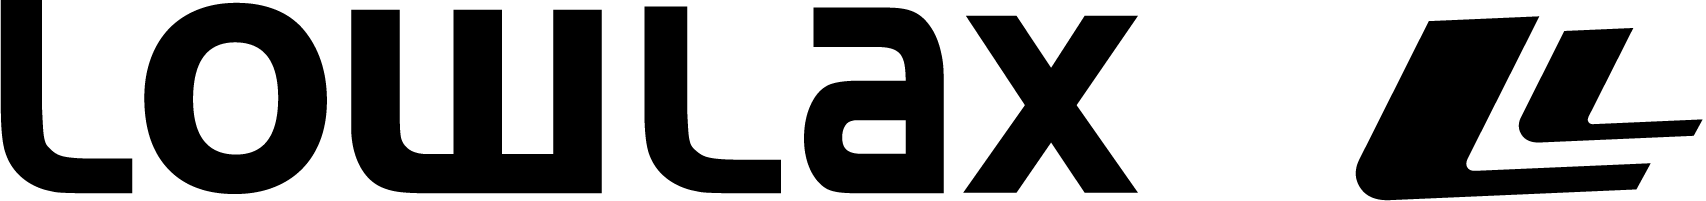 Lowcountry Lacrosse logo